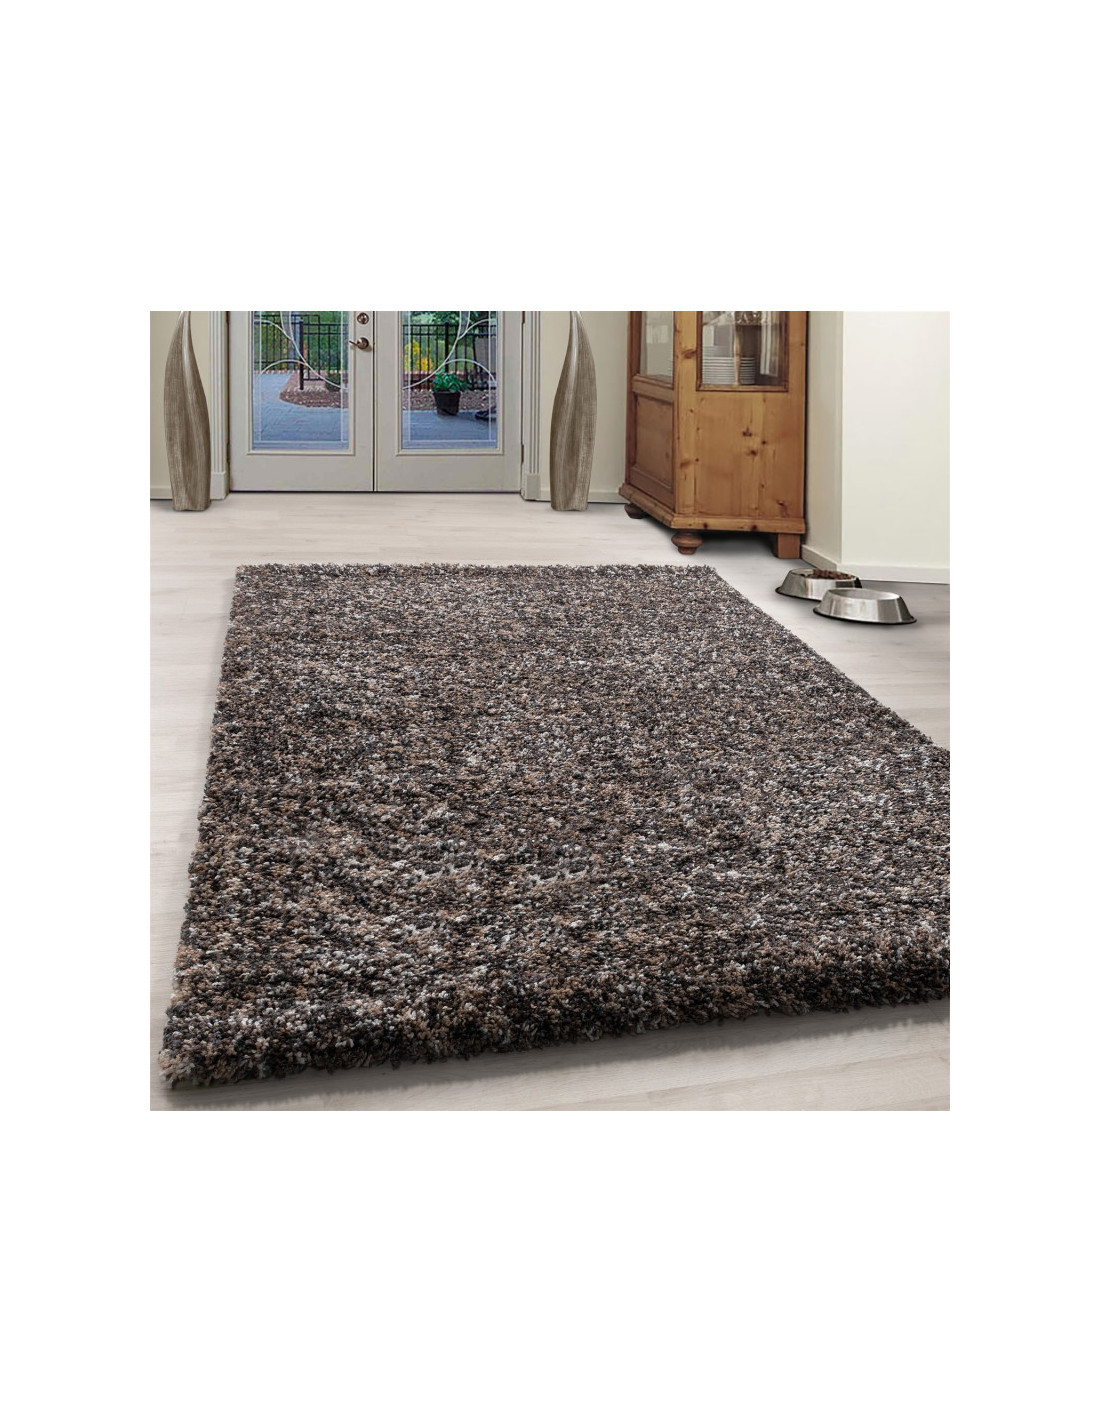 Living room shaggy carpet high quality long pile deep pile taupe cream beige mottled